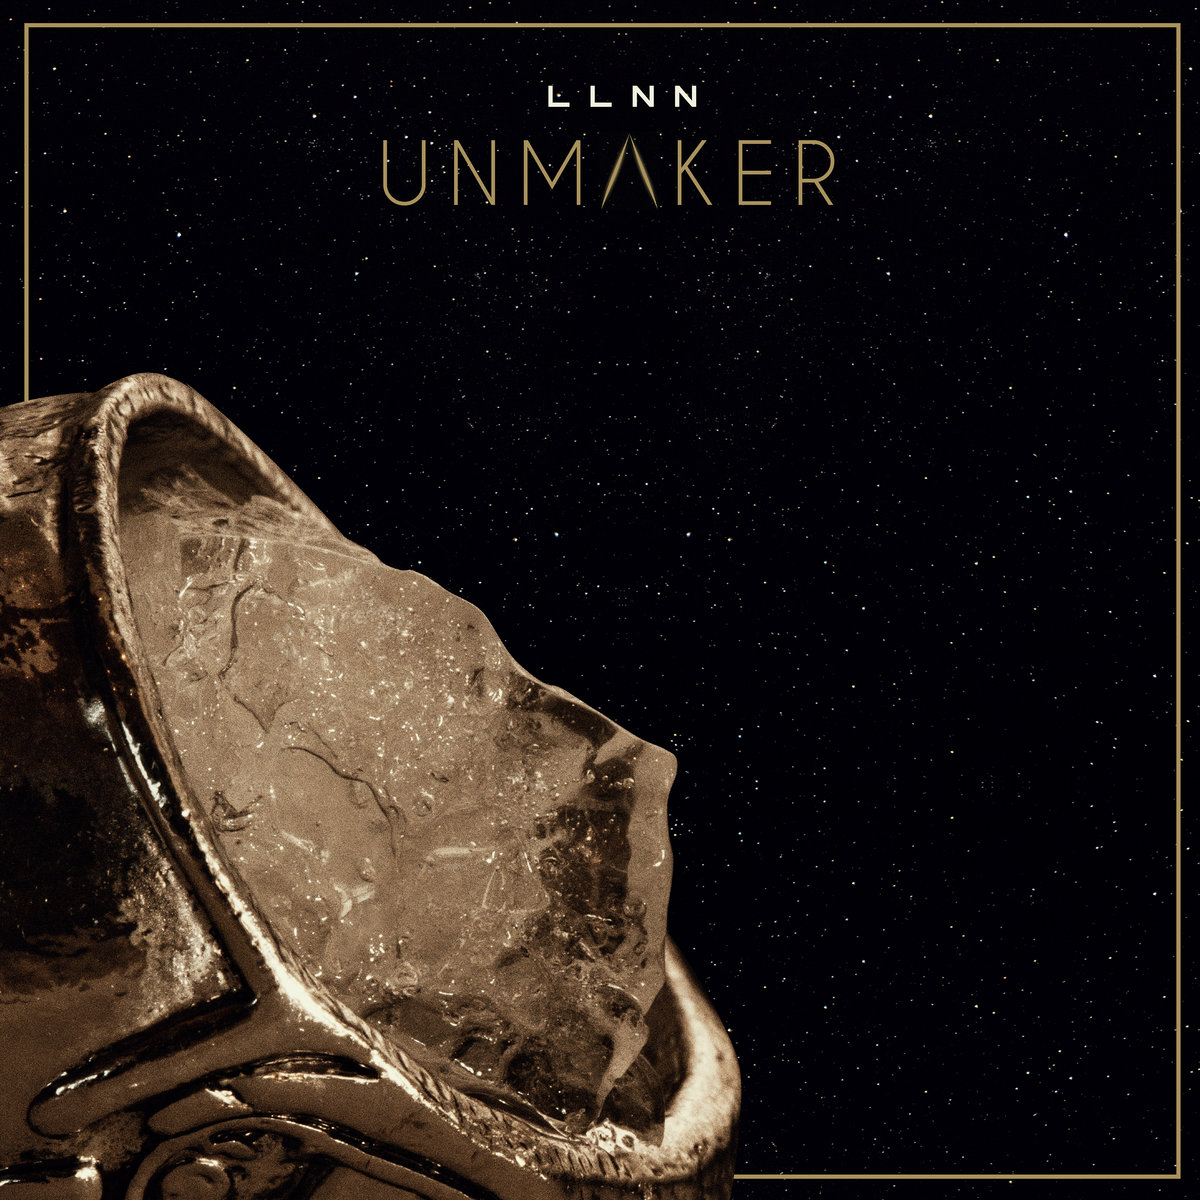 Unmaker | LLNN